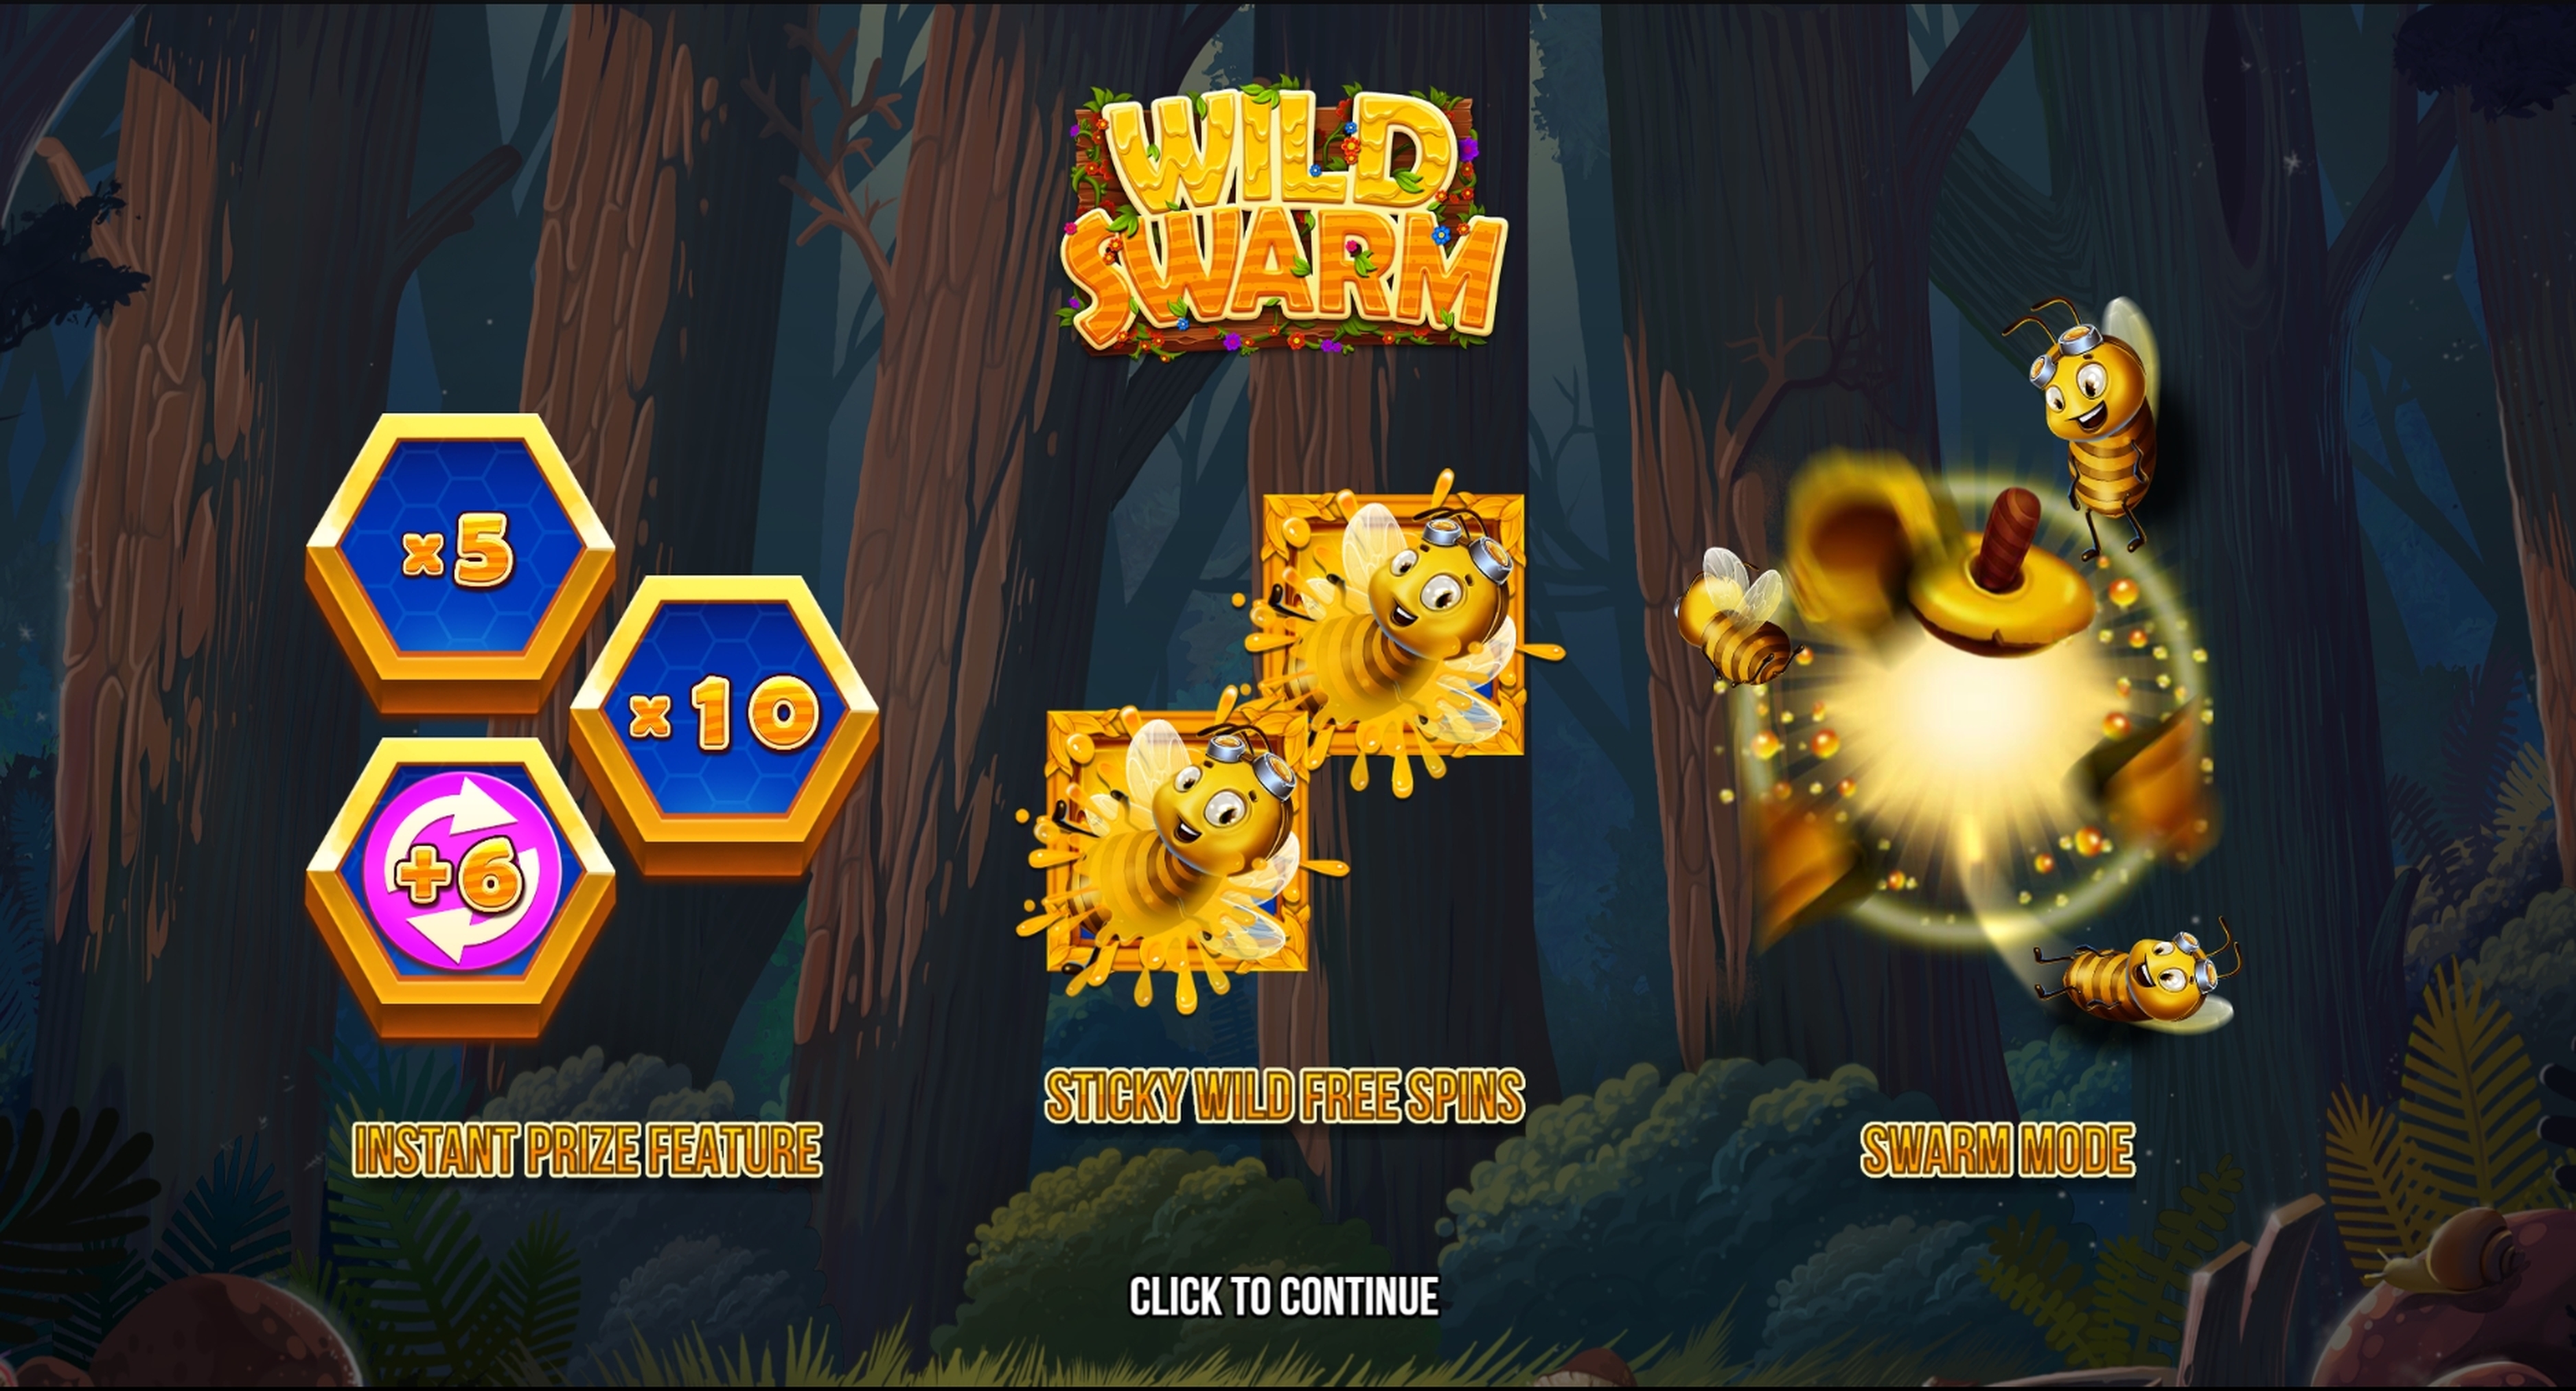 Play Wild Swarm Free Casino Slot Game by Push Gaming